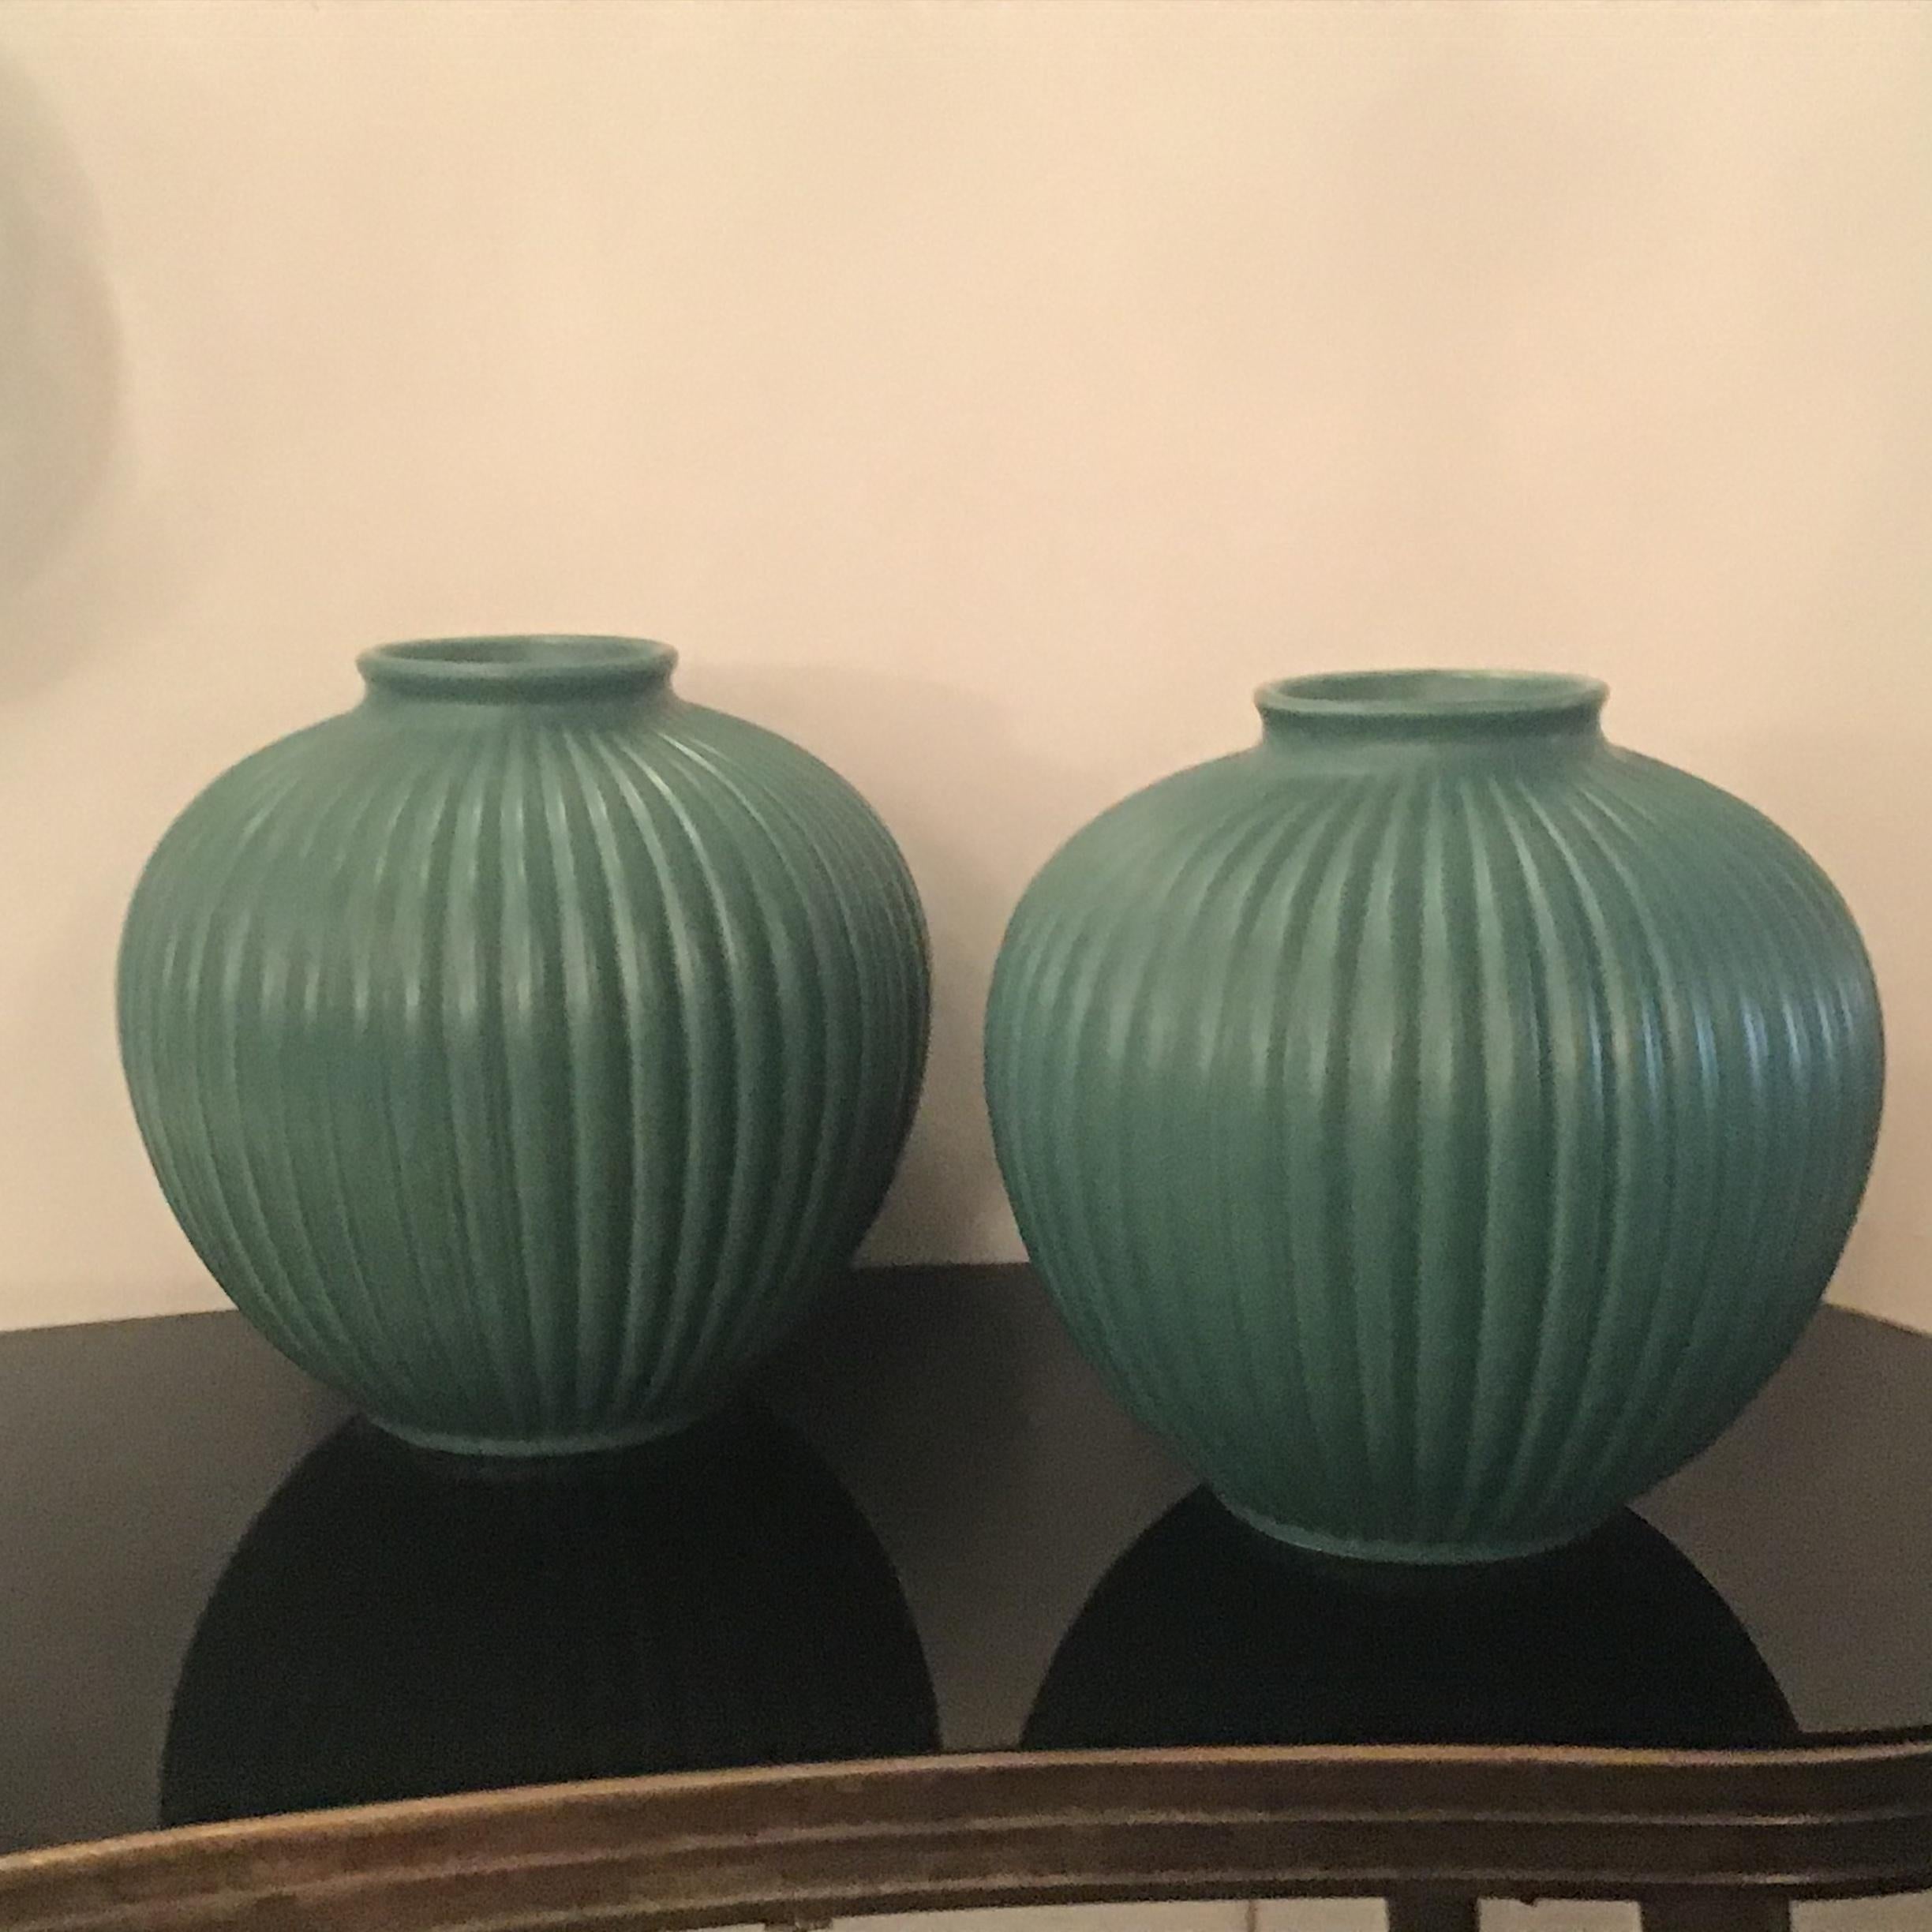 Italian Richard Ginori Giovanni Gariboldi Pair of Vases Green Ceramic 1950 Italy For Sale